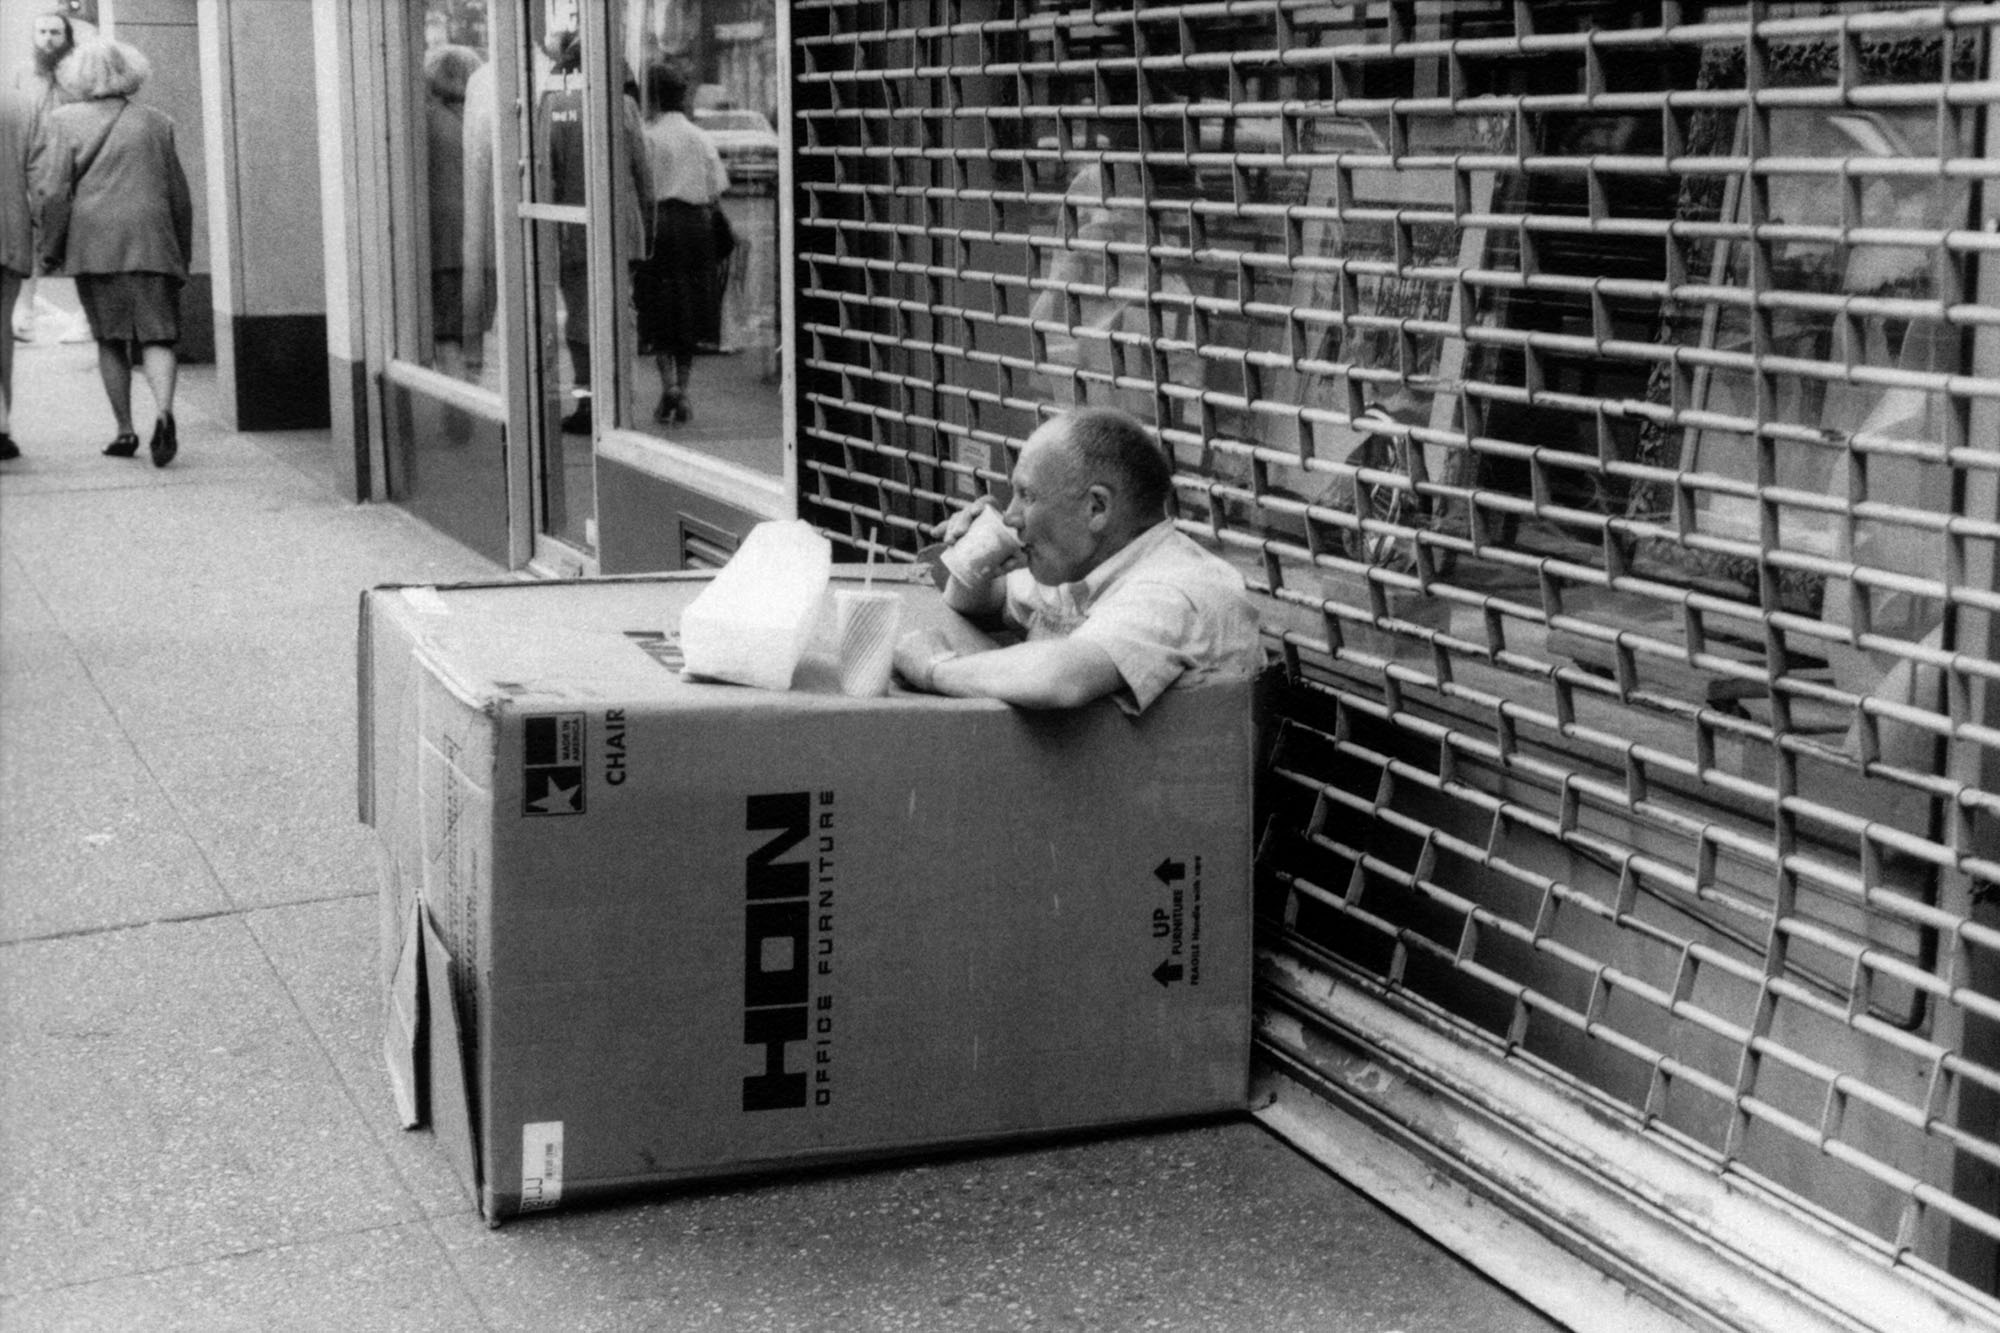 Man in Box, New York 1991